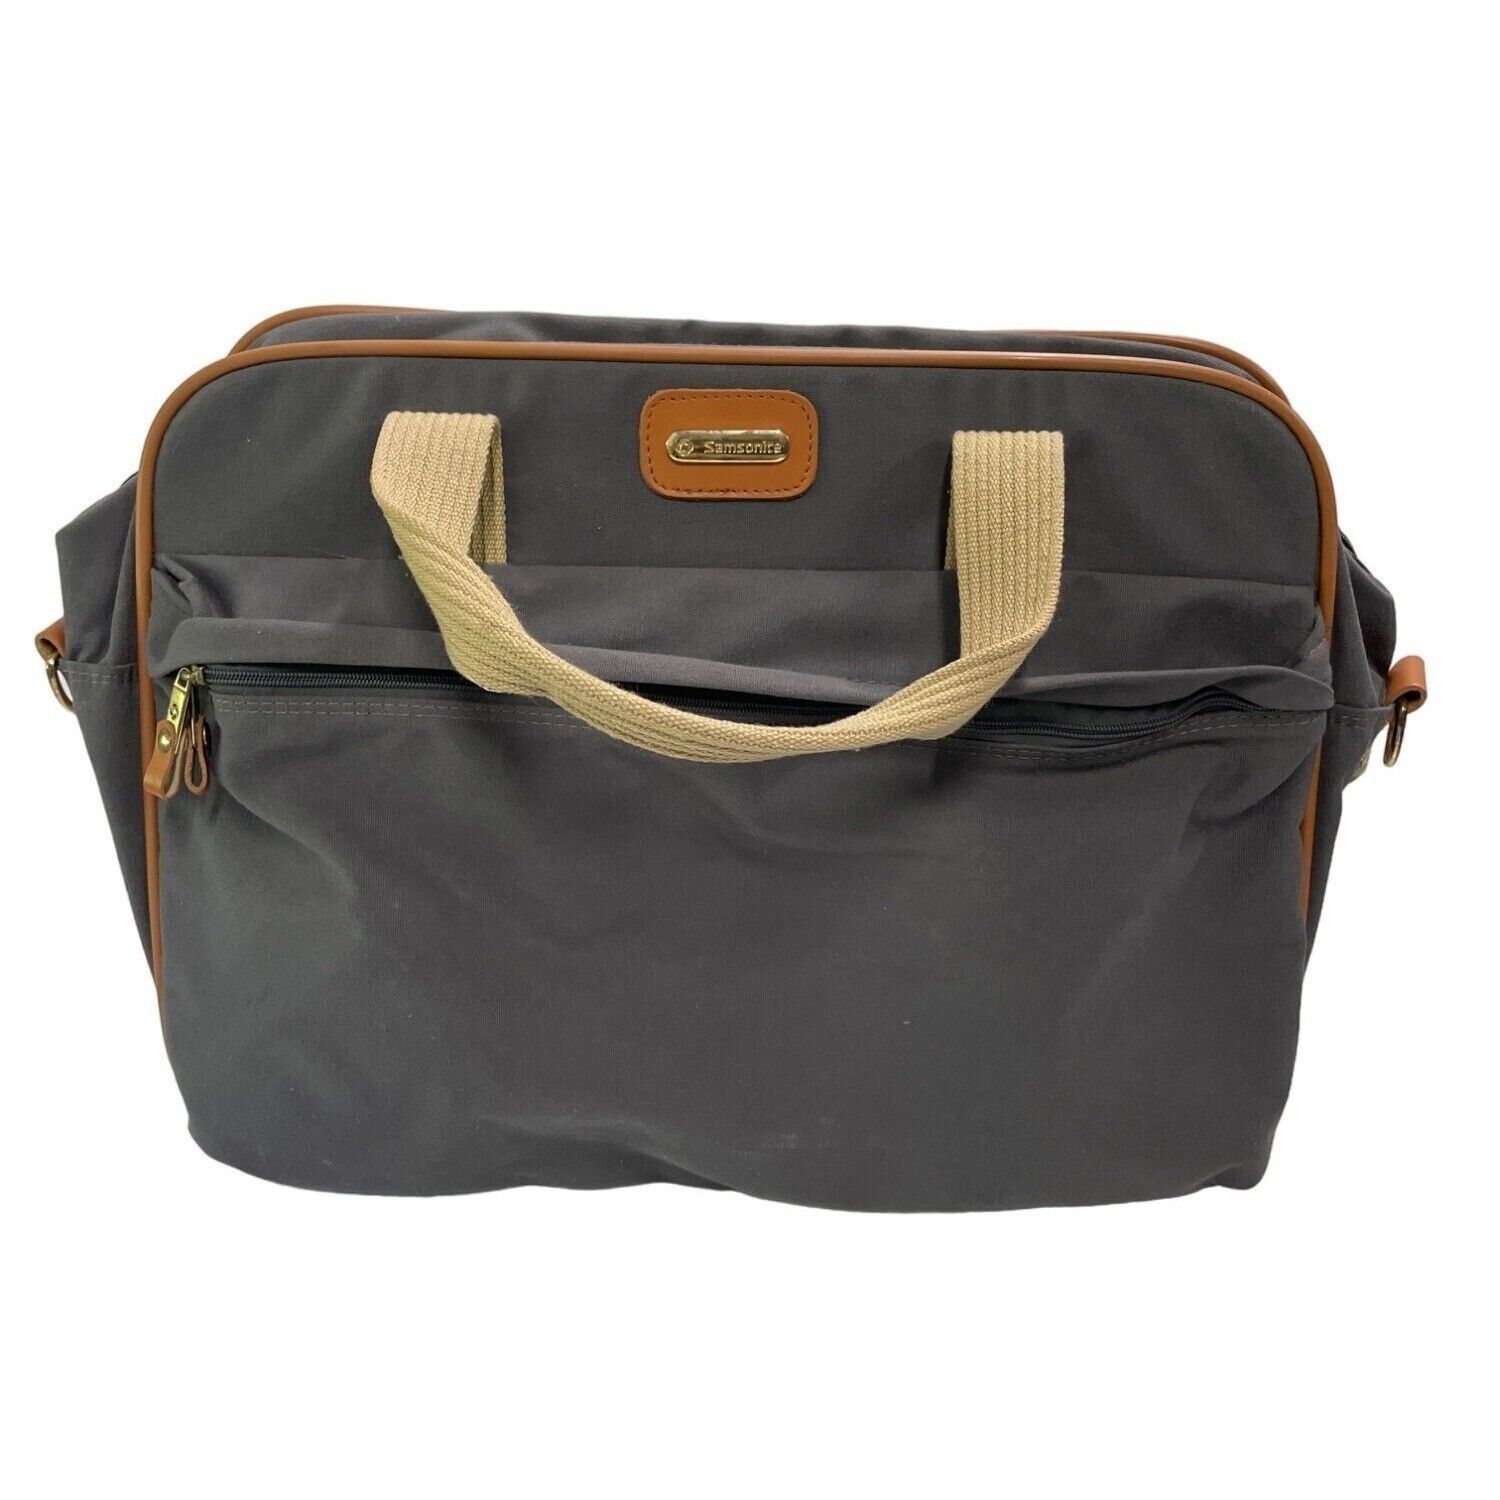 Samsonite Travel Duffle Bag Carry on Grey - $22.24